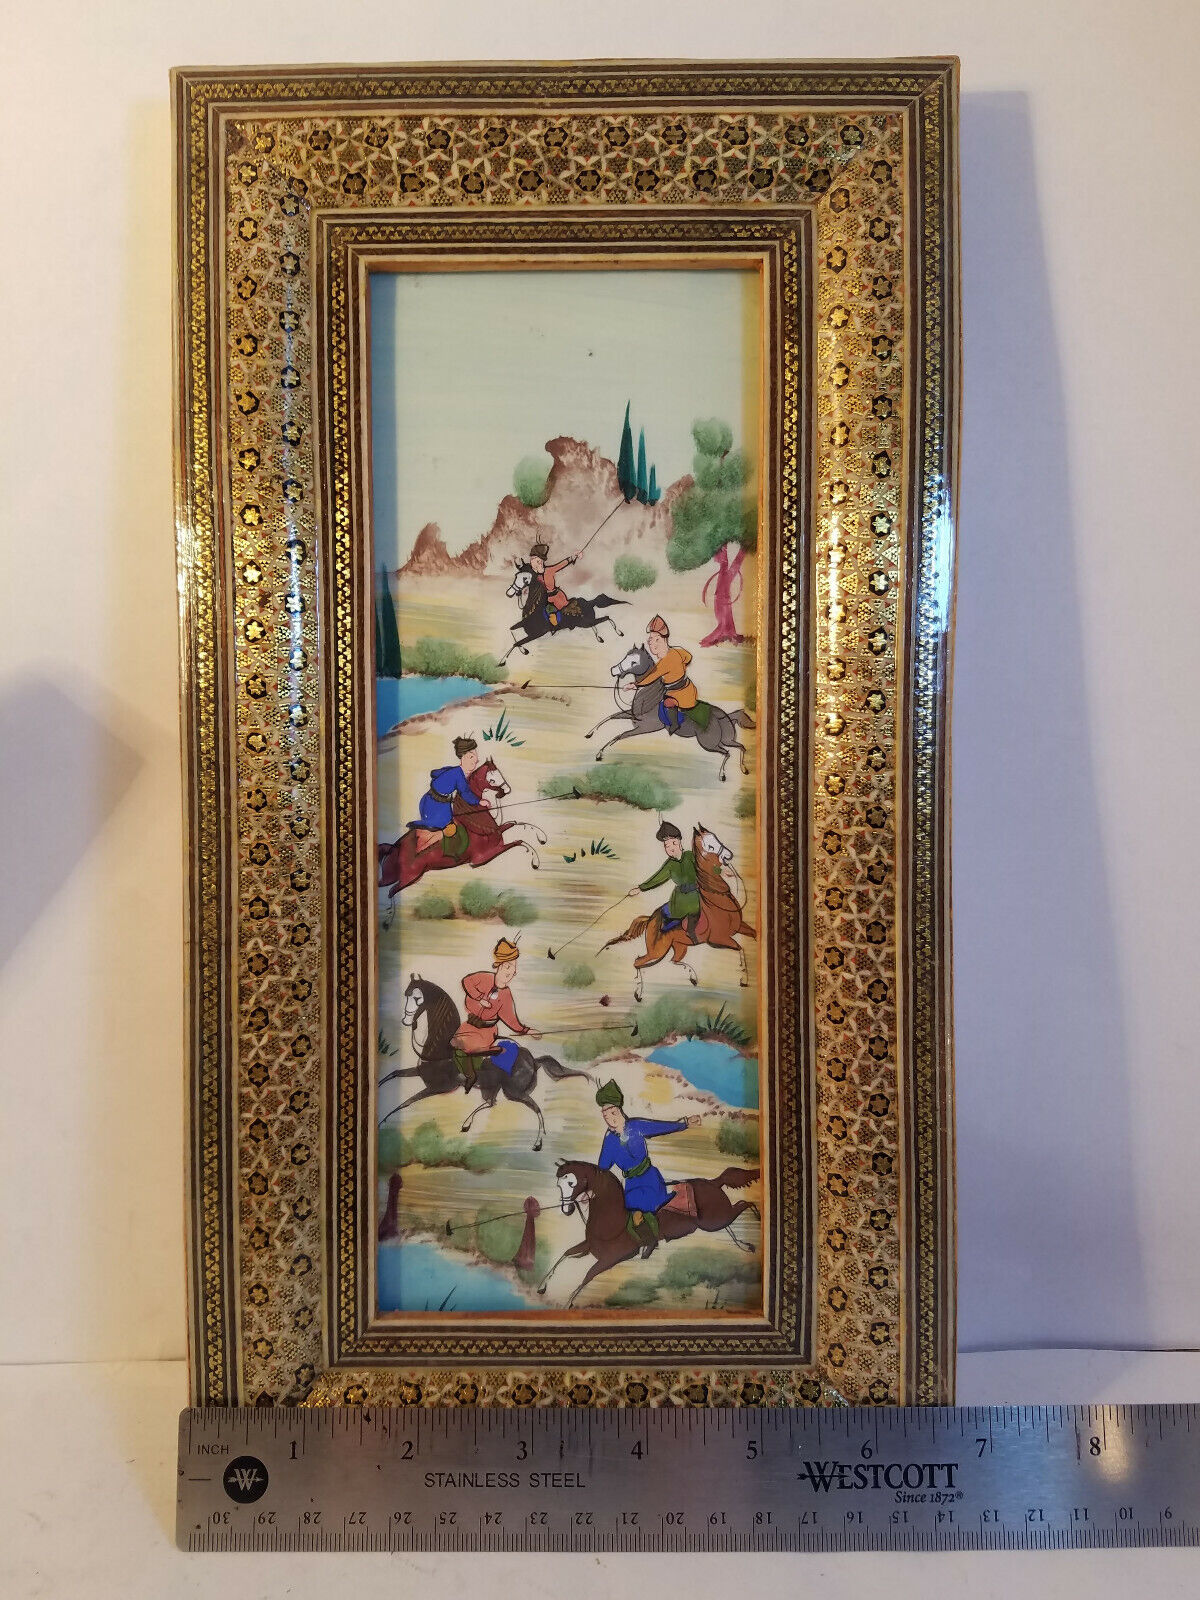 Lot of 2 Vintage Persian Equestrian Paintings in Wooden Khatam Inlay Frames Без бренда - фотография #12